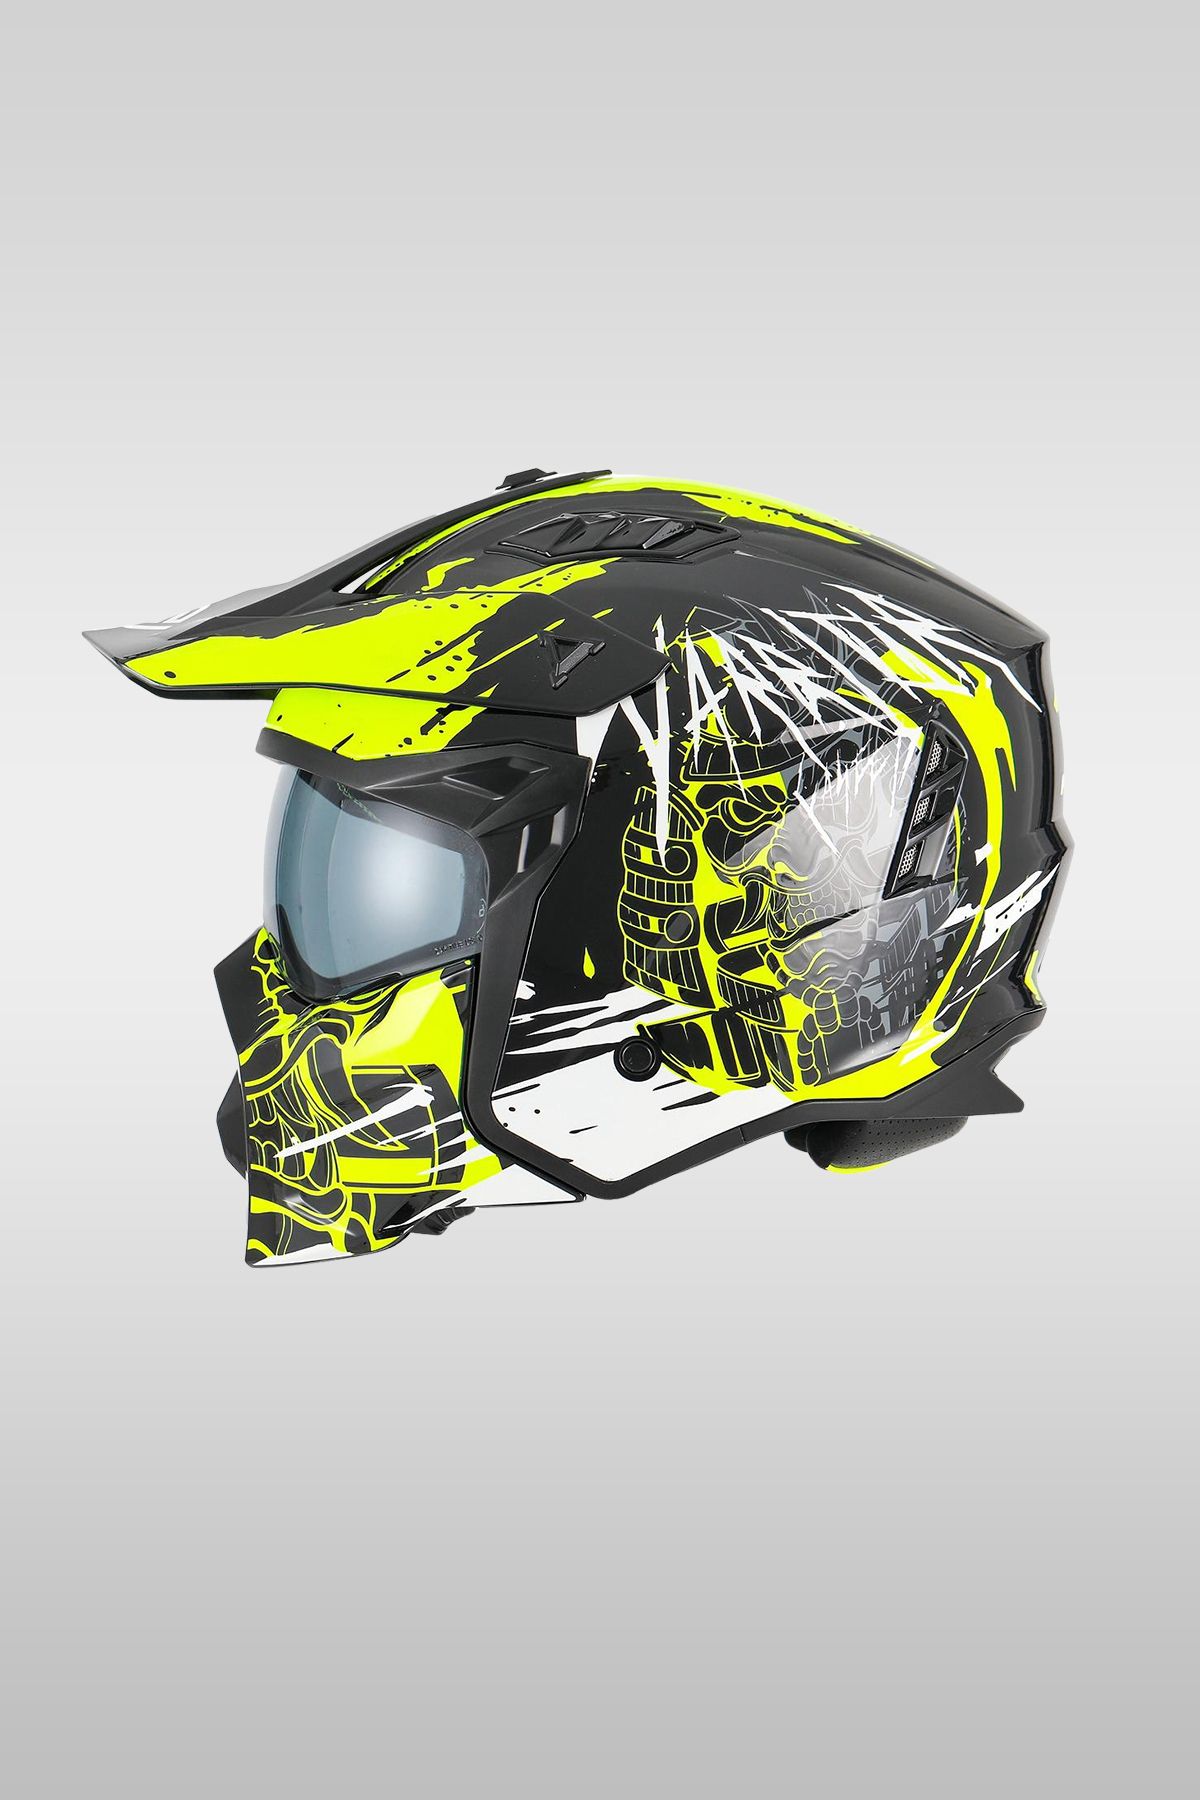 Sway Fi?bba Motors Sway X1-x Seul Matt Warrior Black Yellow White Moduler Motosiklet Kaskı